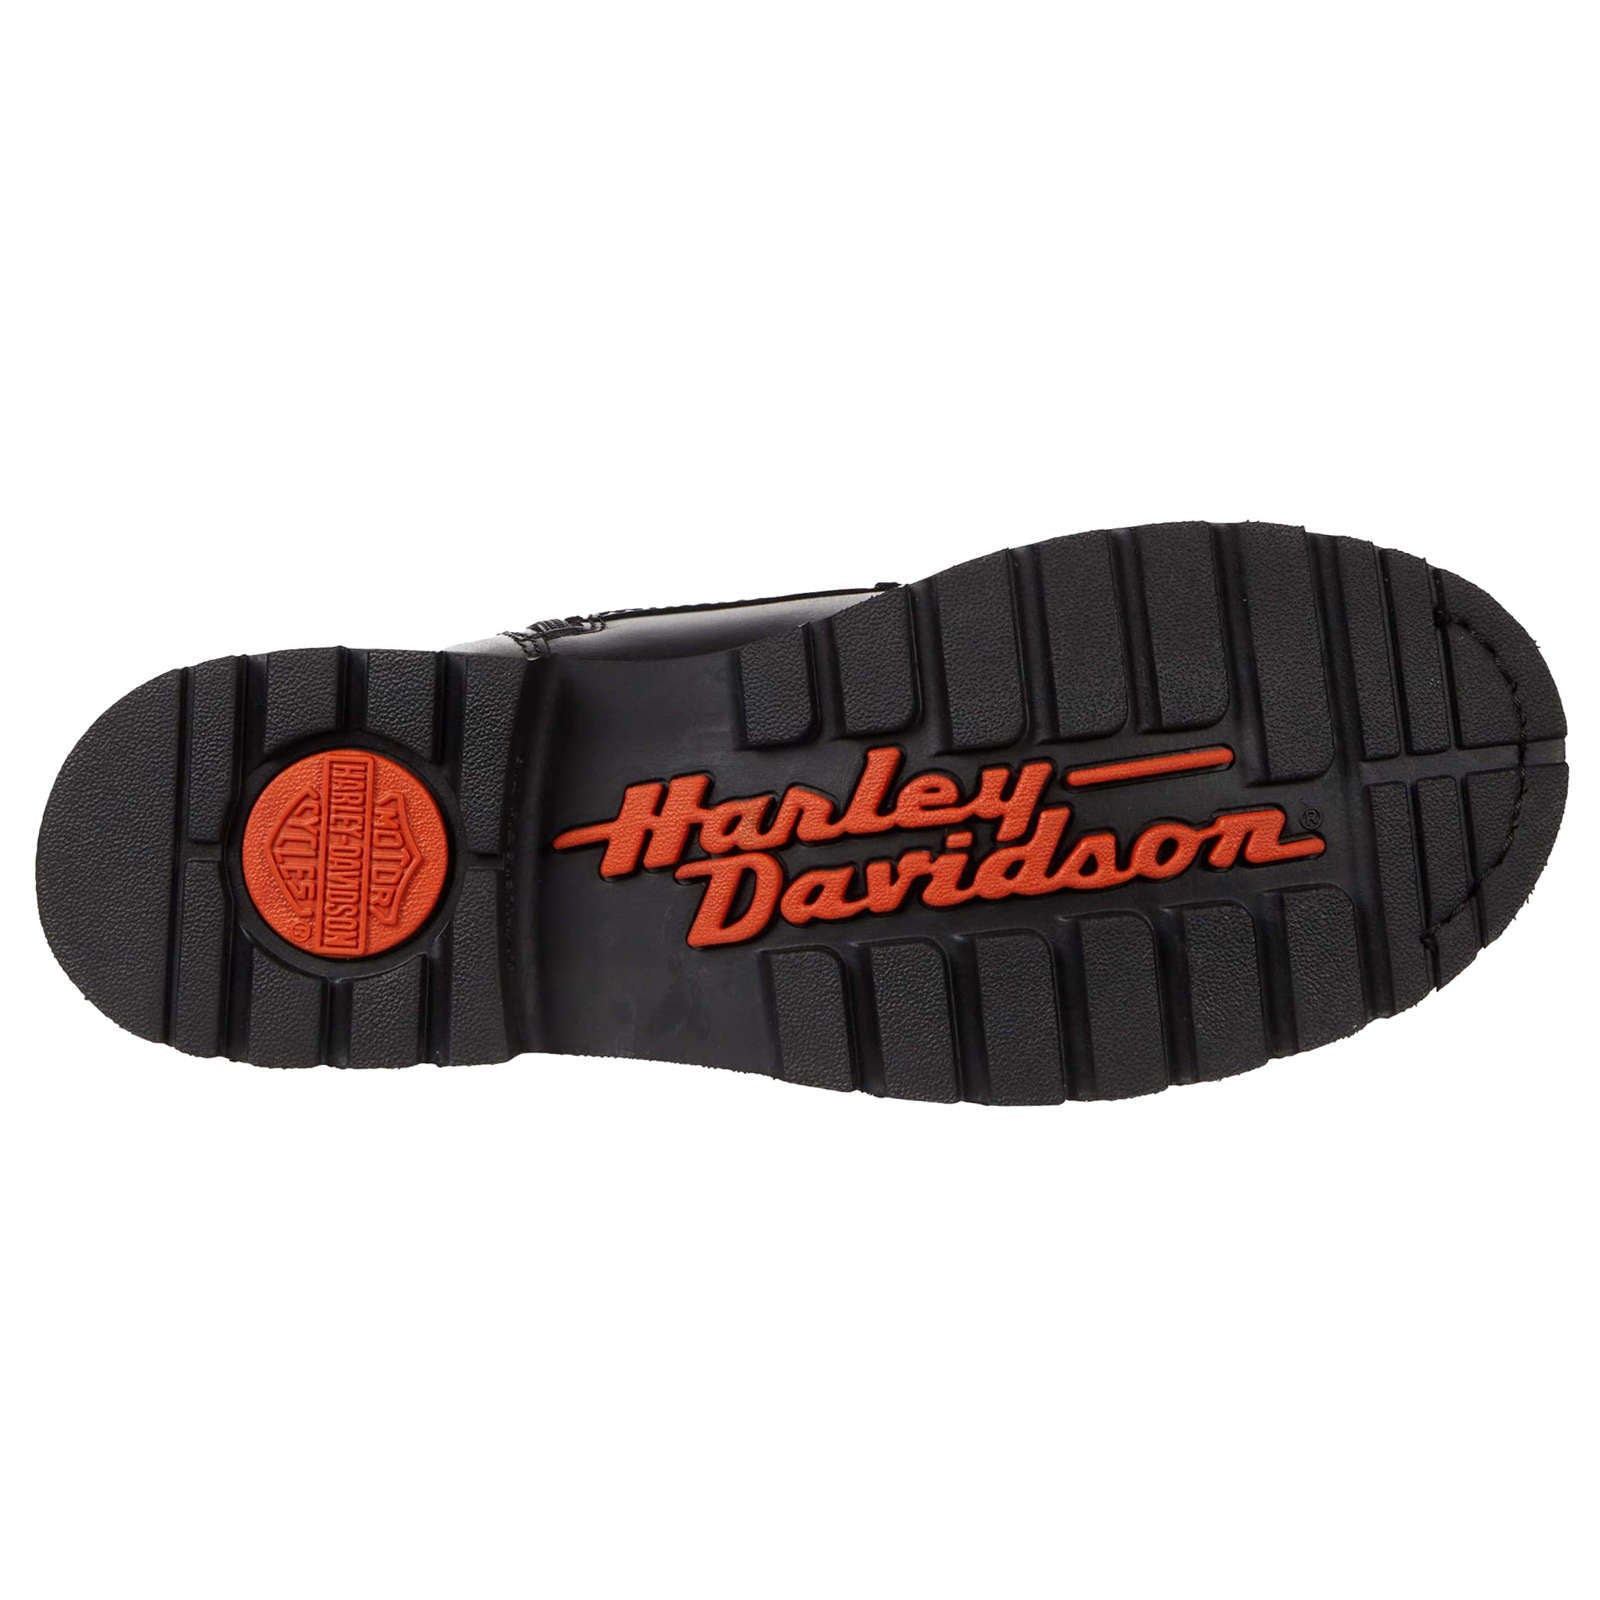 Harley Davidson Beason Full Grain Leather Women's Mid Calf Riding Boots#color_black